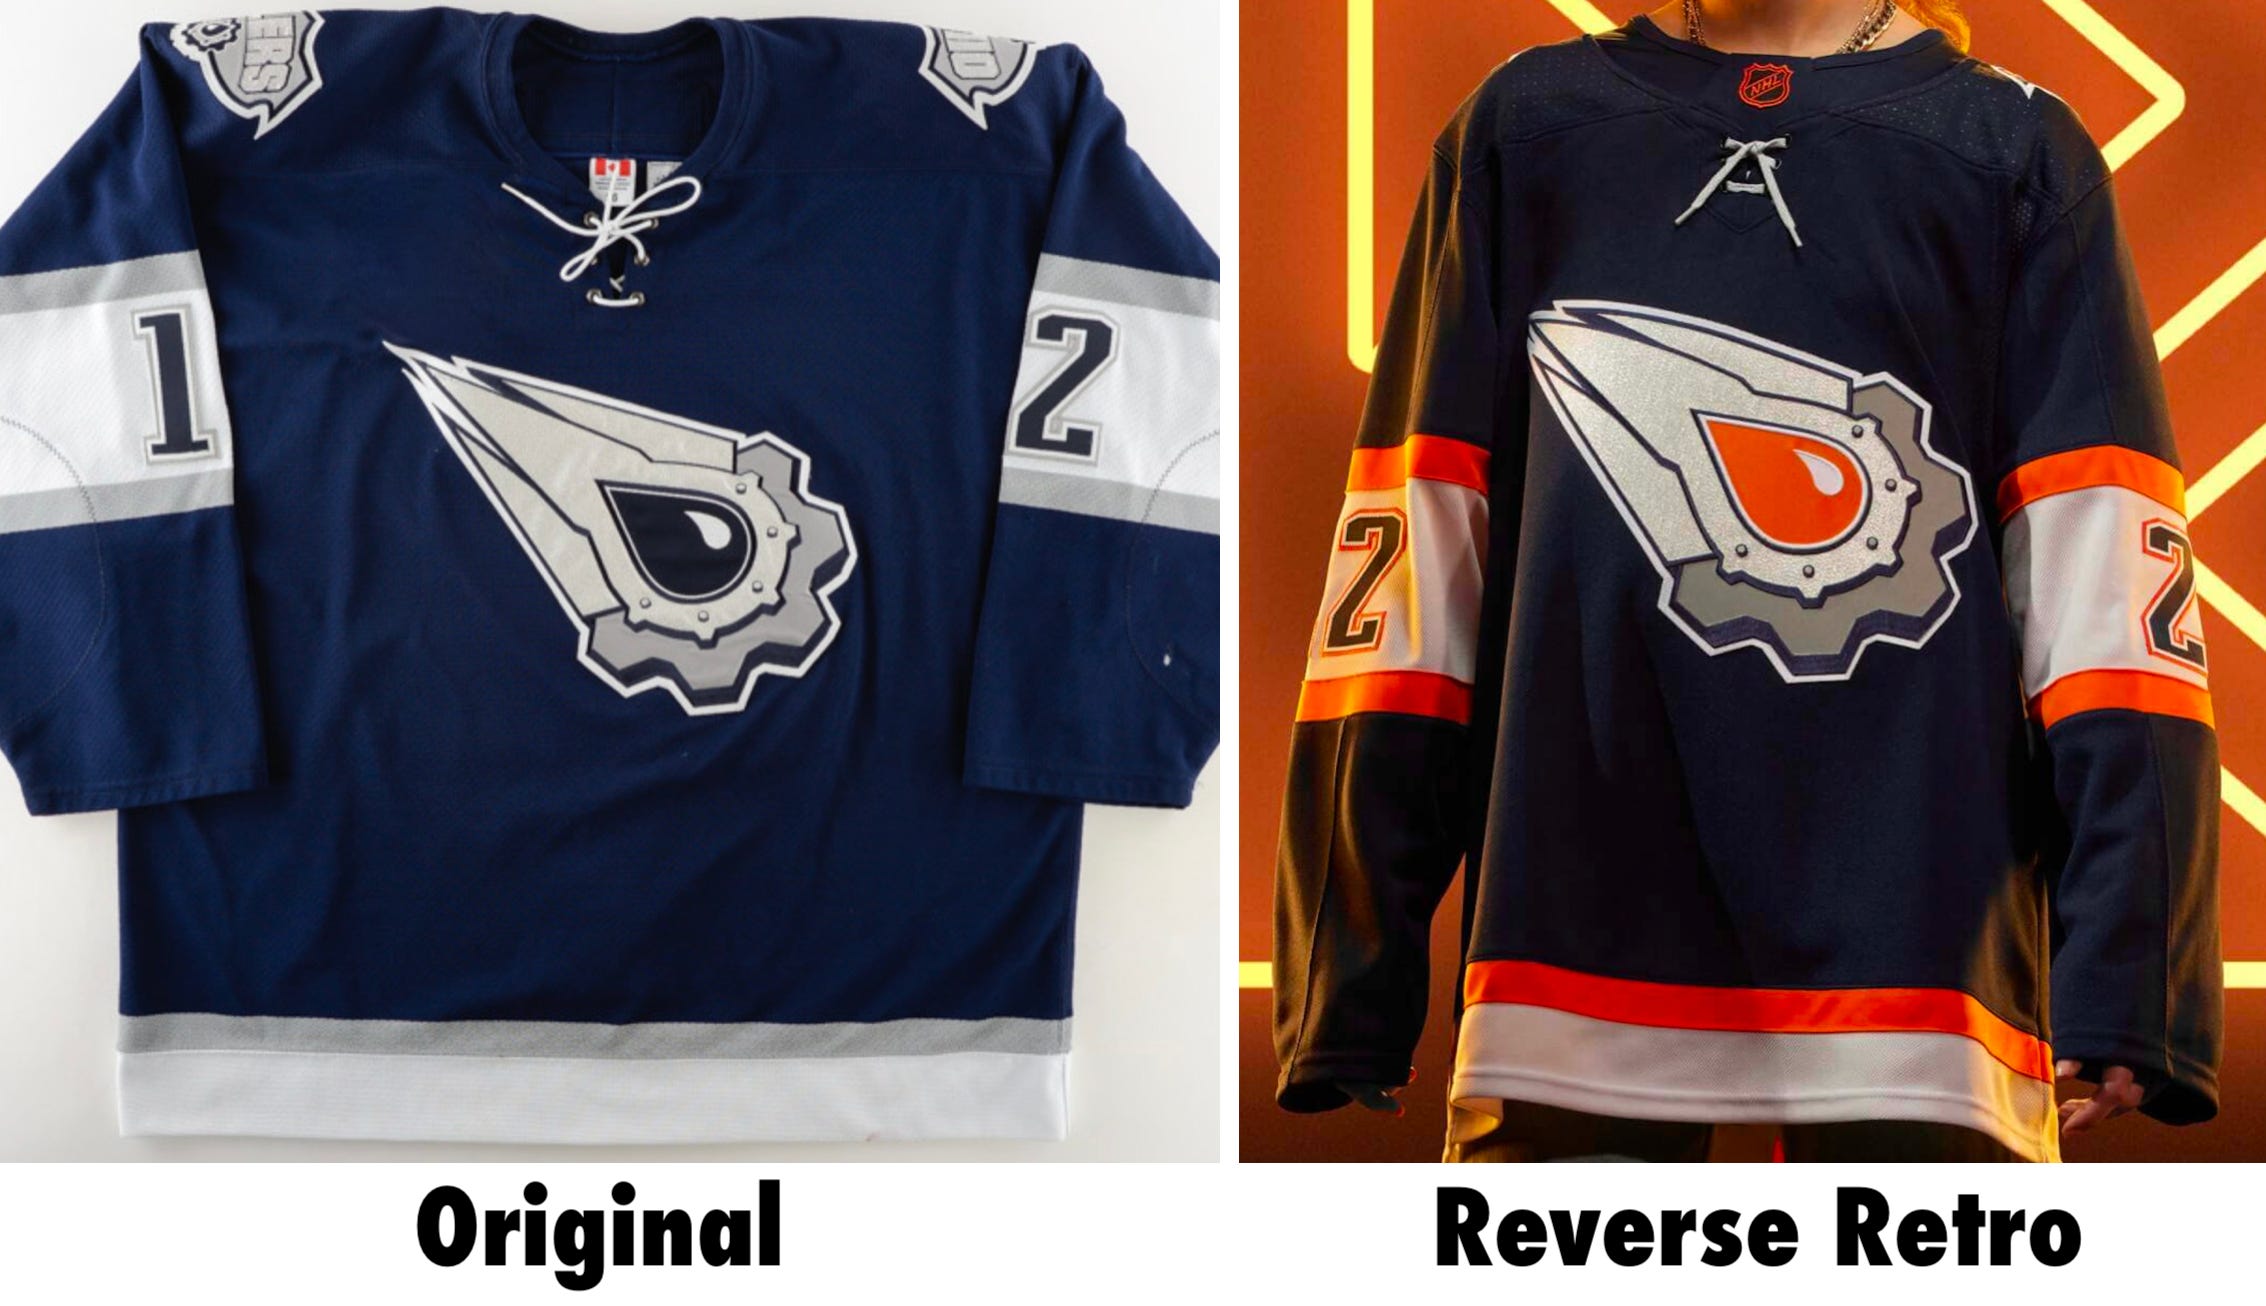 Paul Lukas on X: Comparison of Quebec Nordiques uniform (left) and Avs'  Reverse Retro uniform based on it (right).  / X